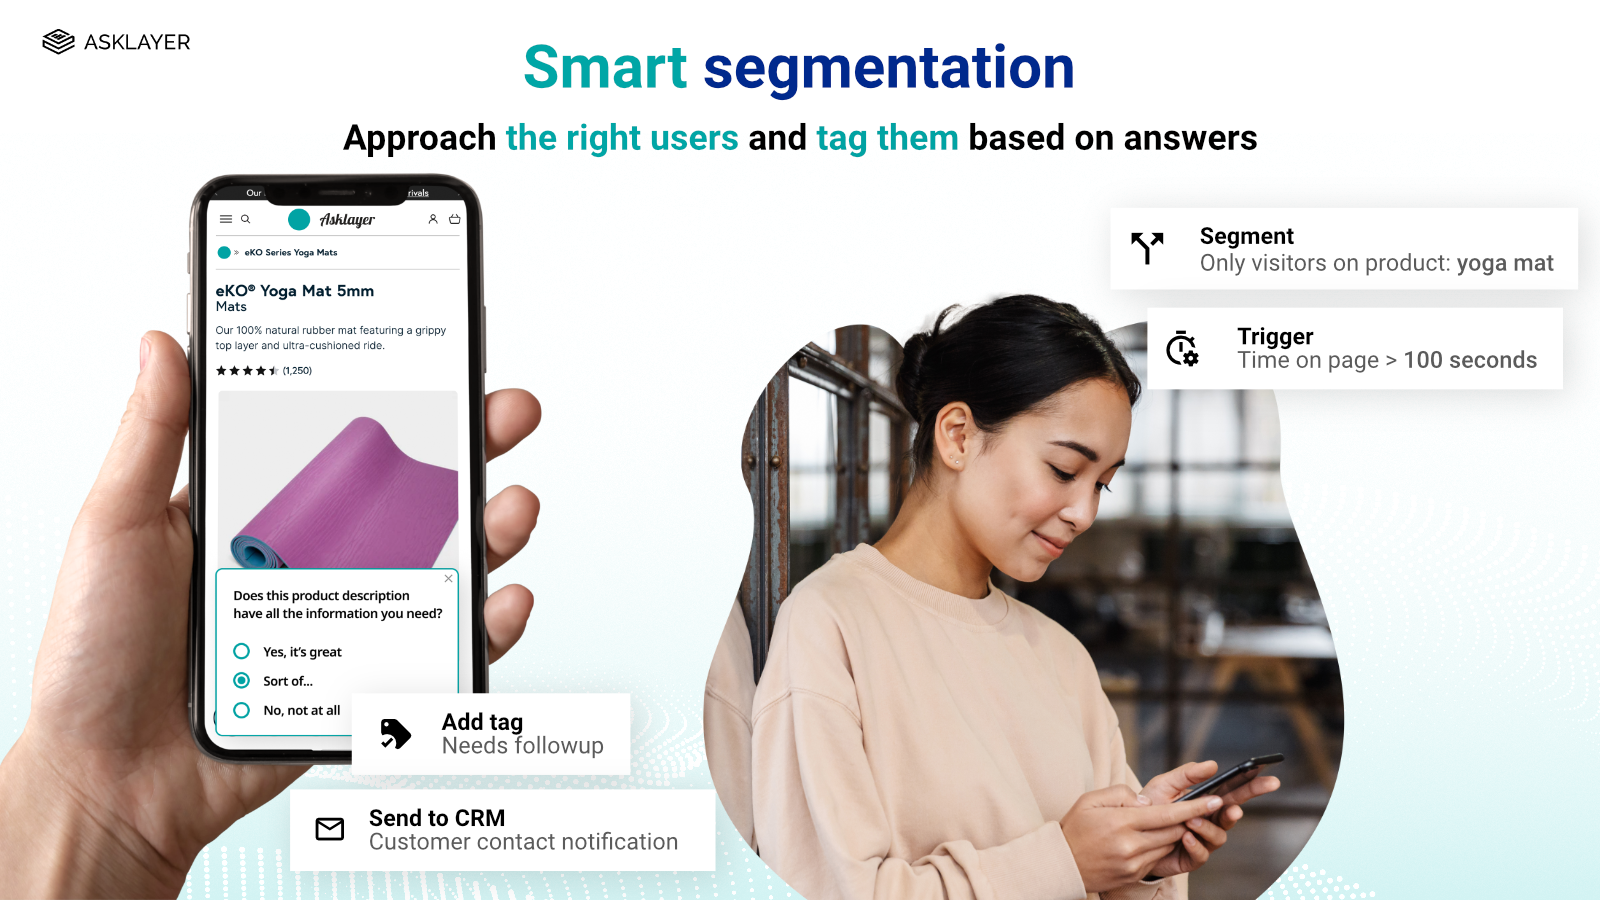 Smart segmentation of users